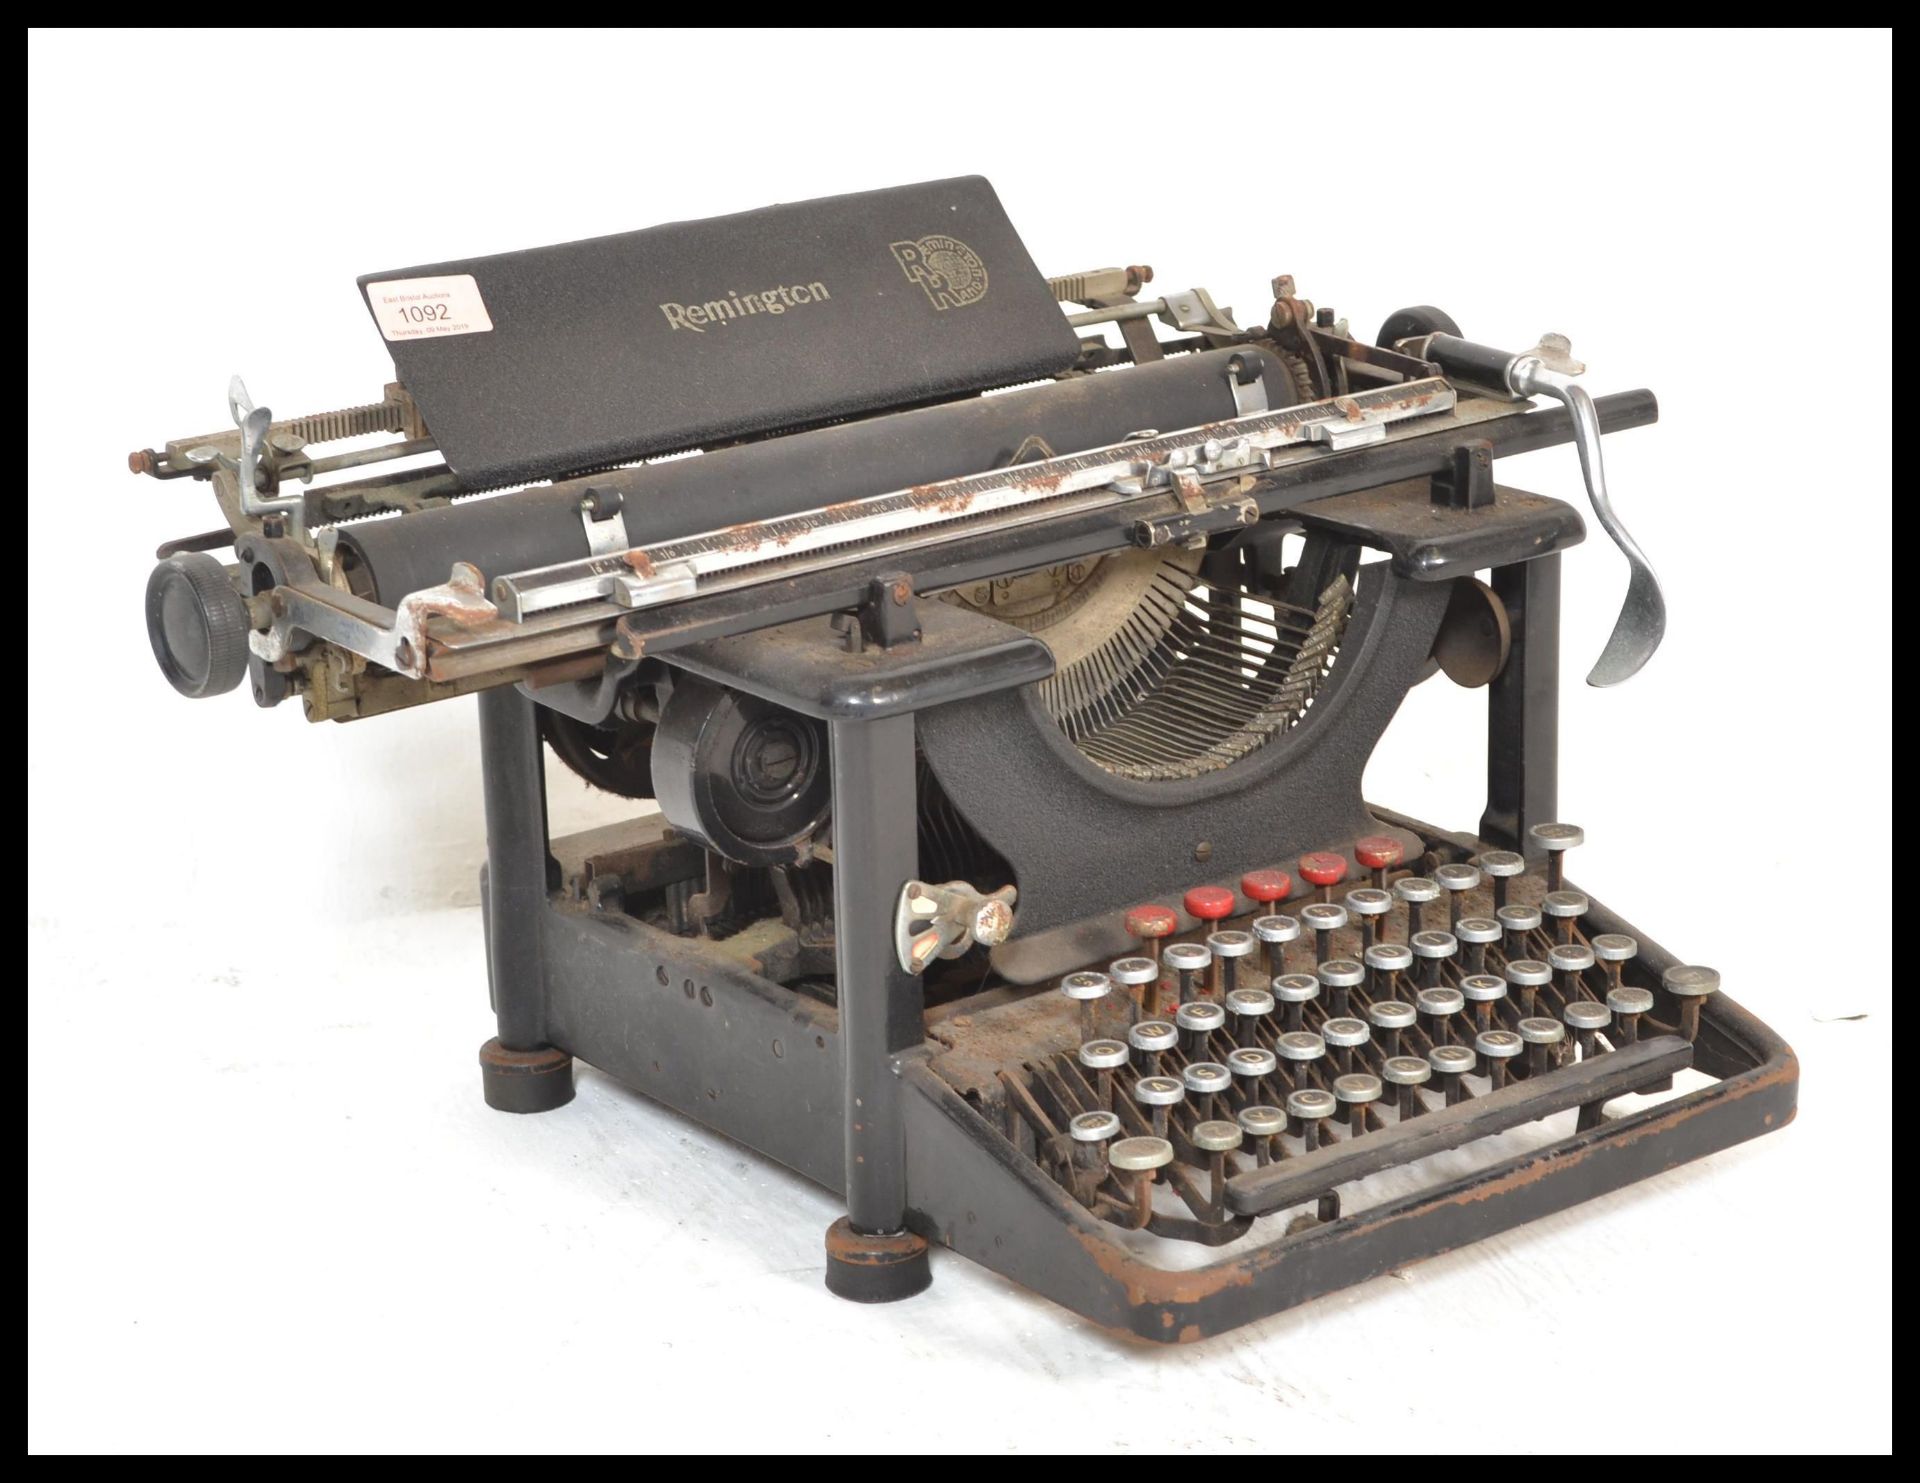 A vintage retro 20th Century industrial Remington Rand USA American made typewriter.